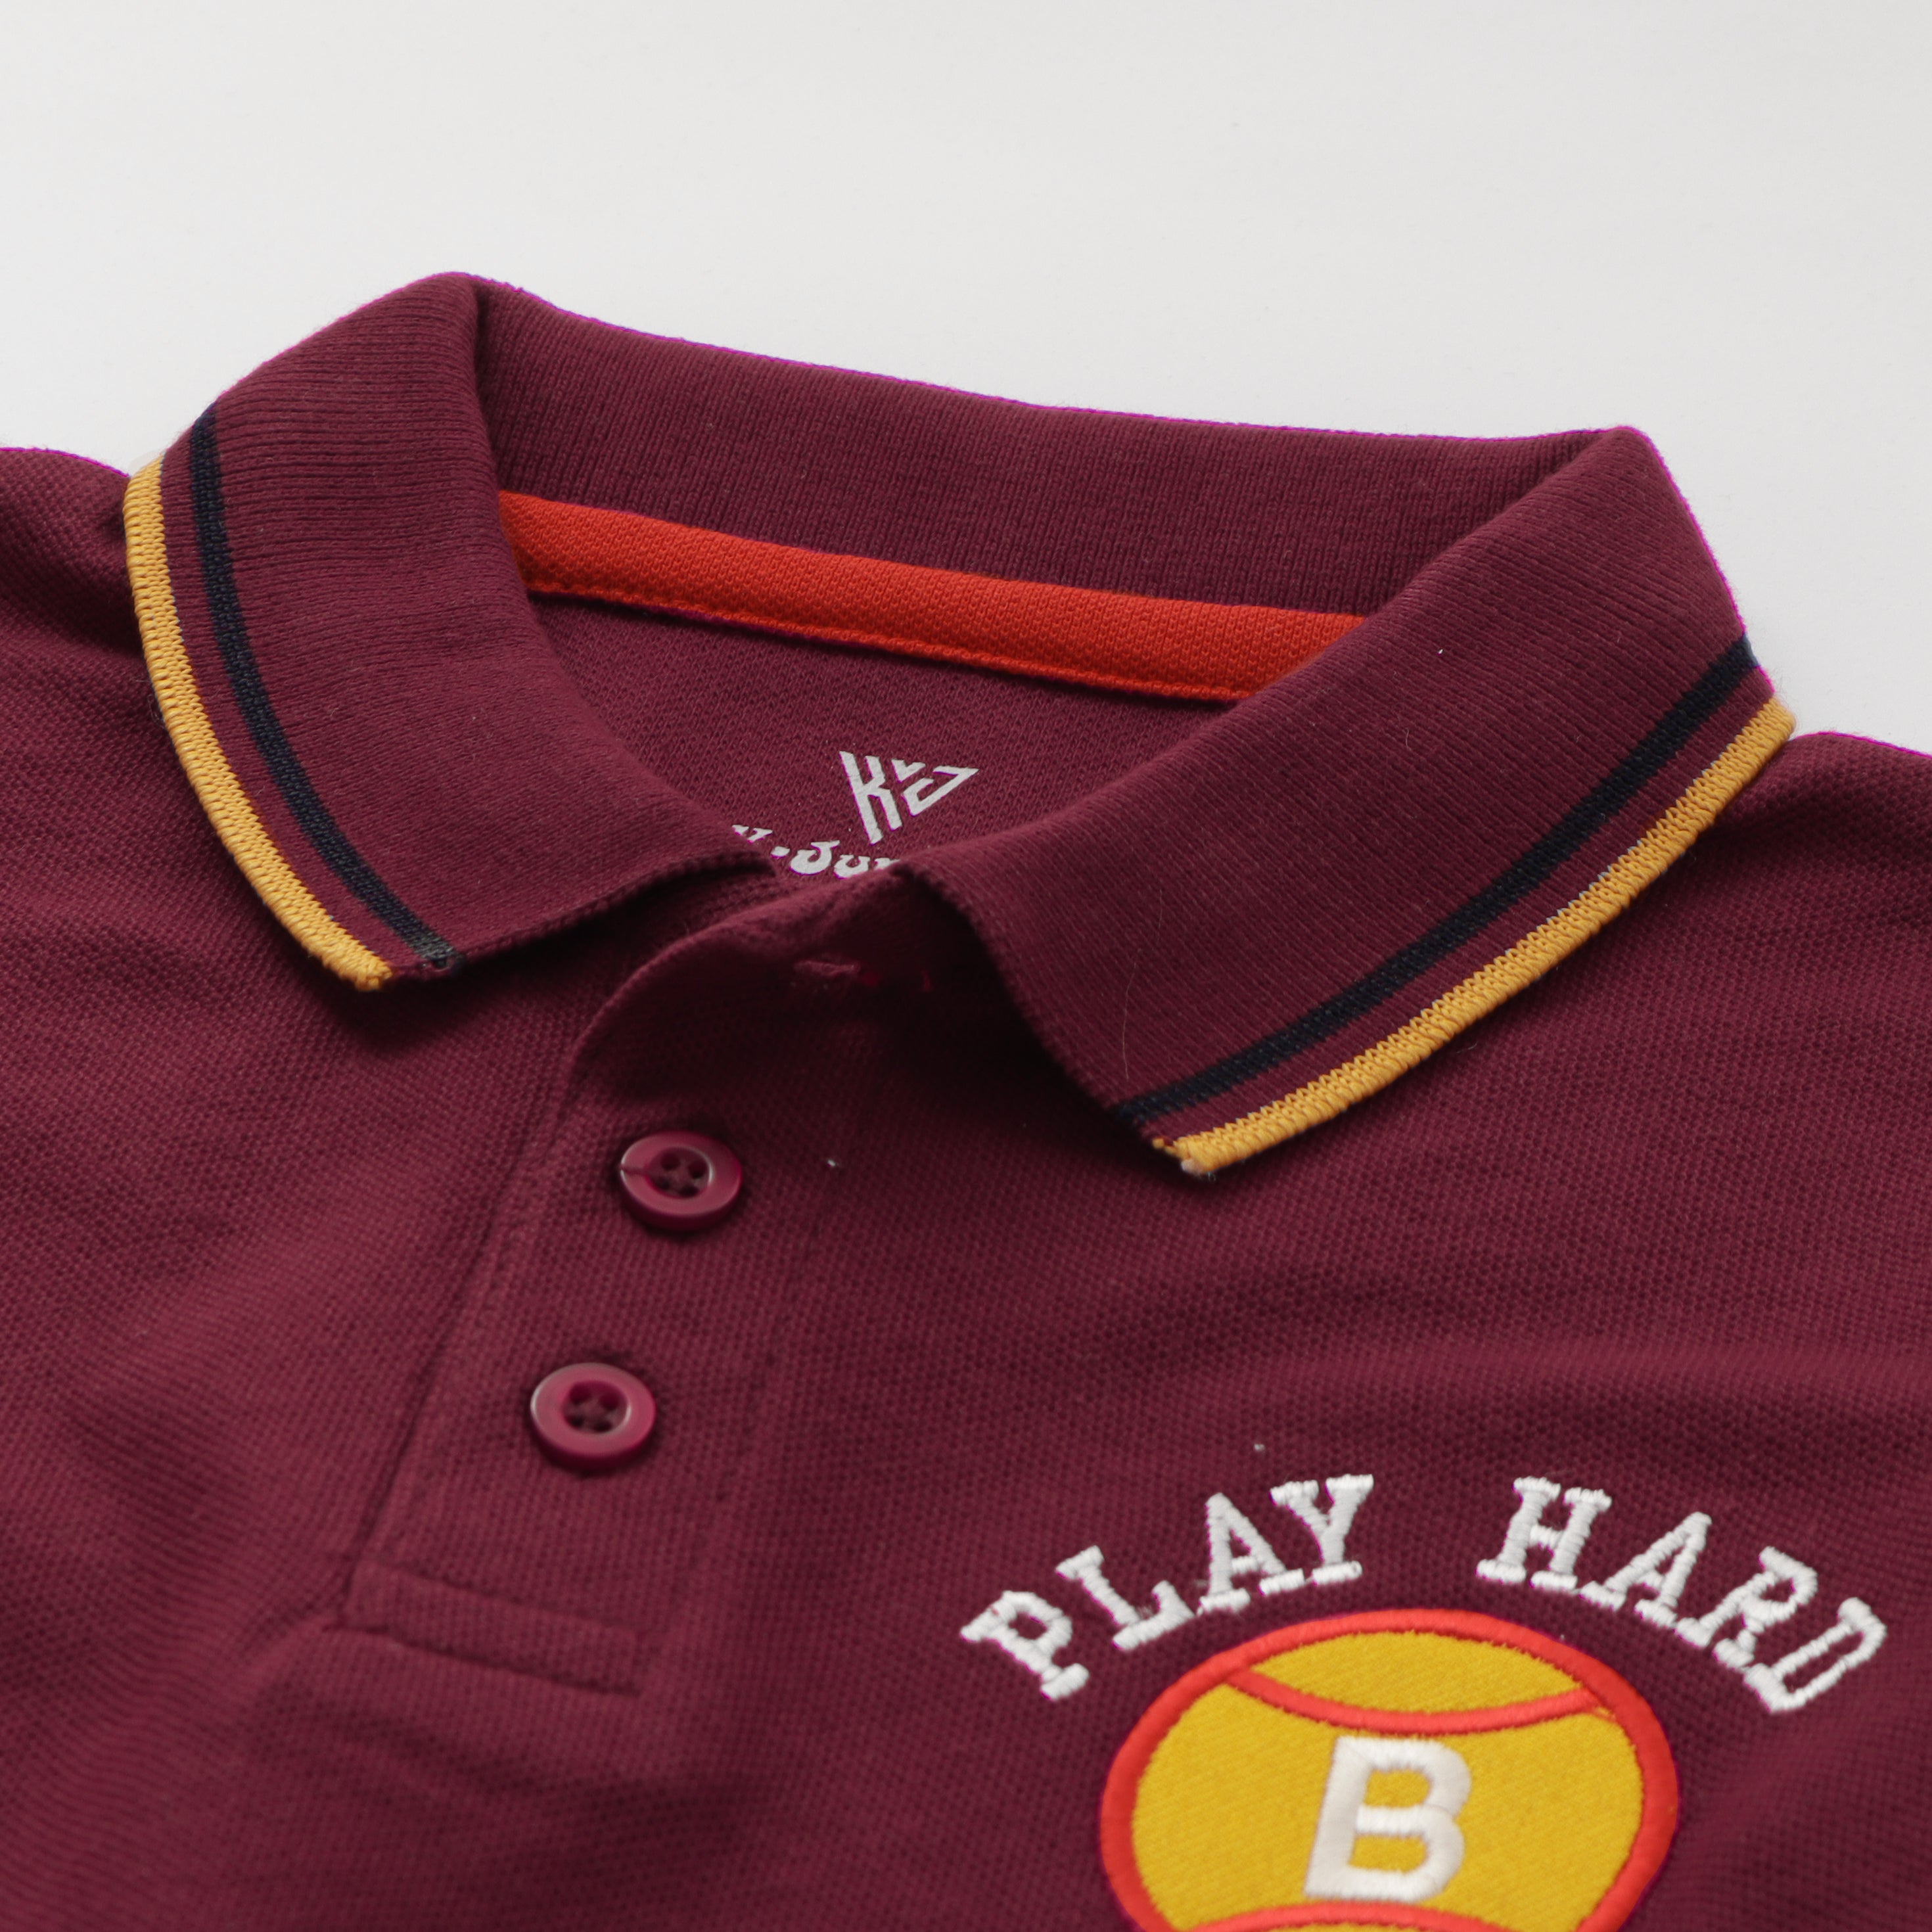 Boys Half Sleeves Polo T-Shirt (PLAY-HARD)